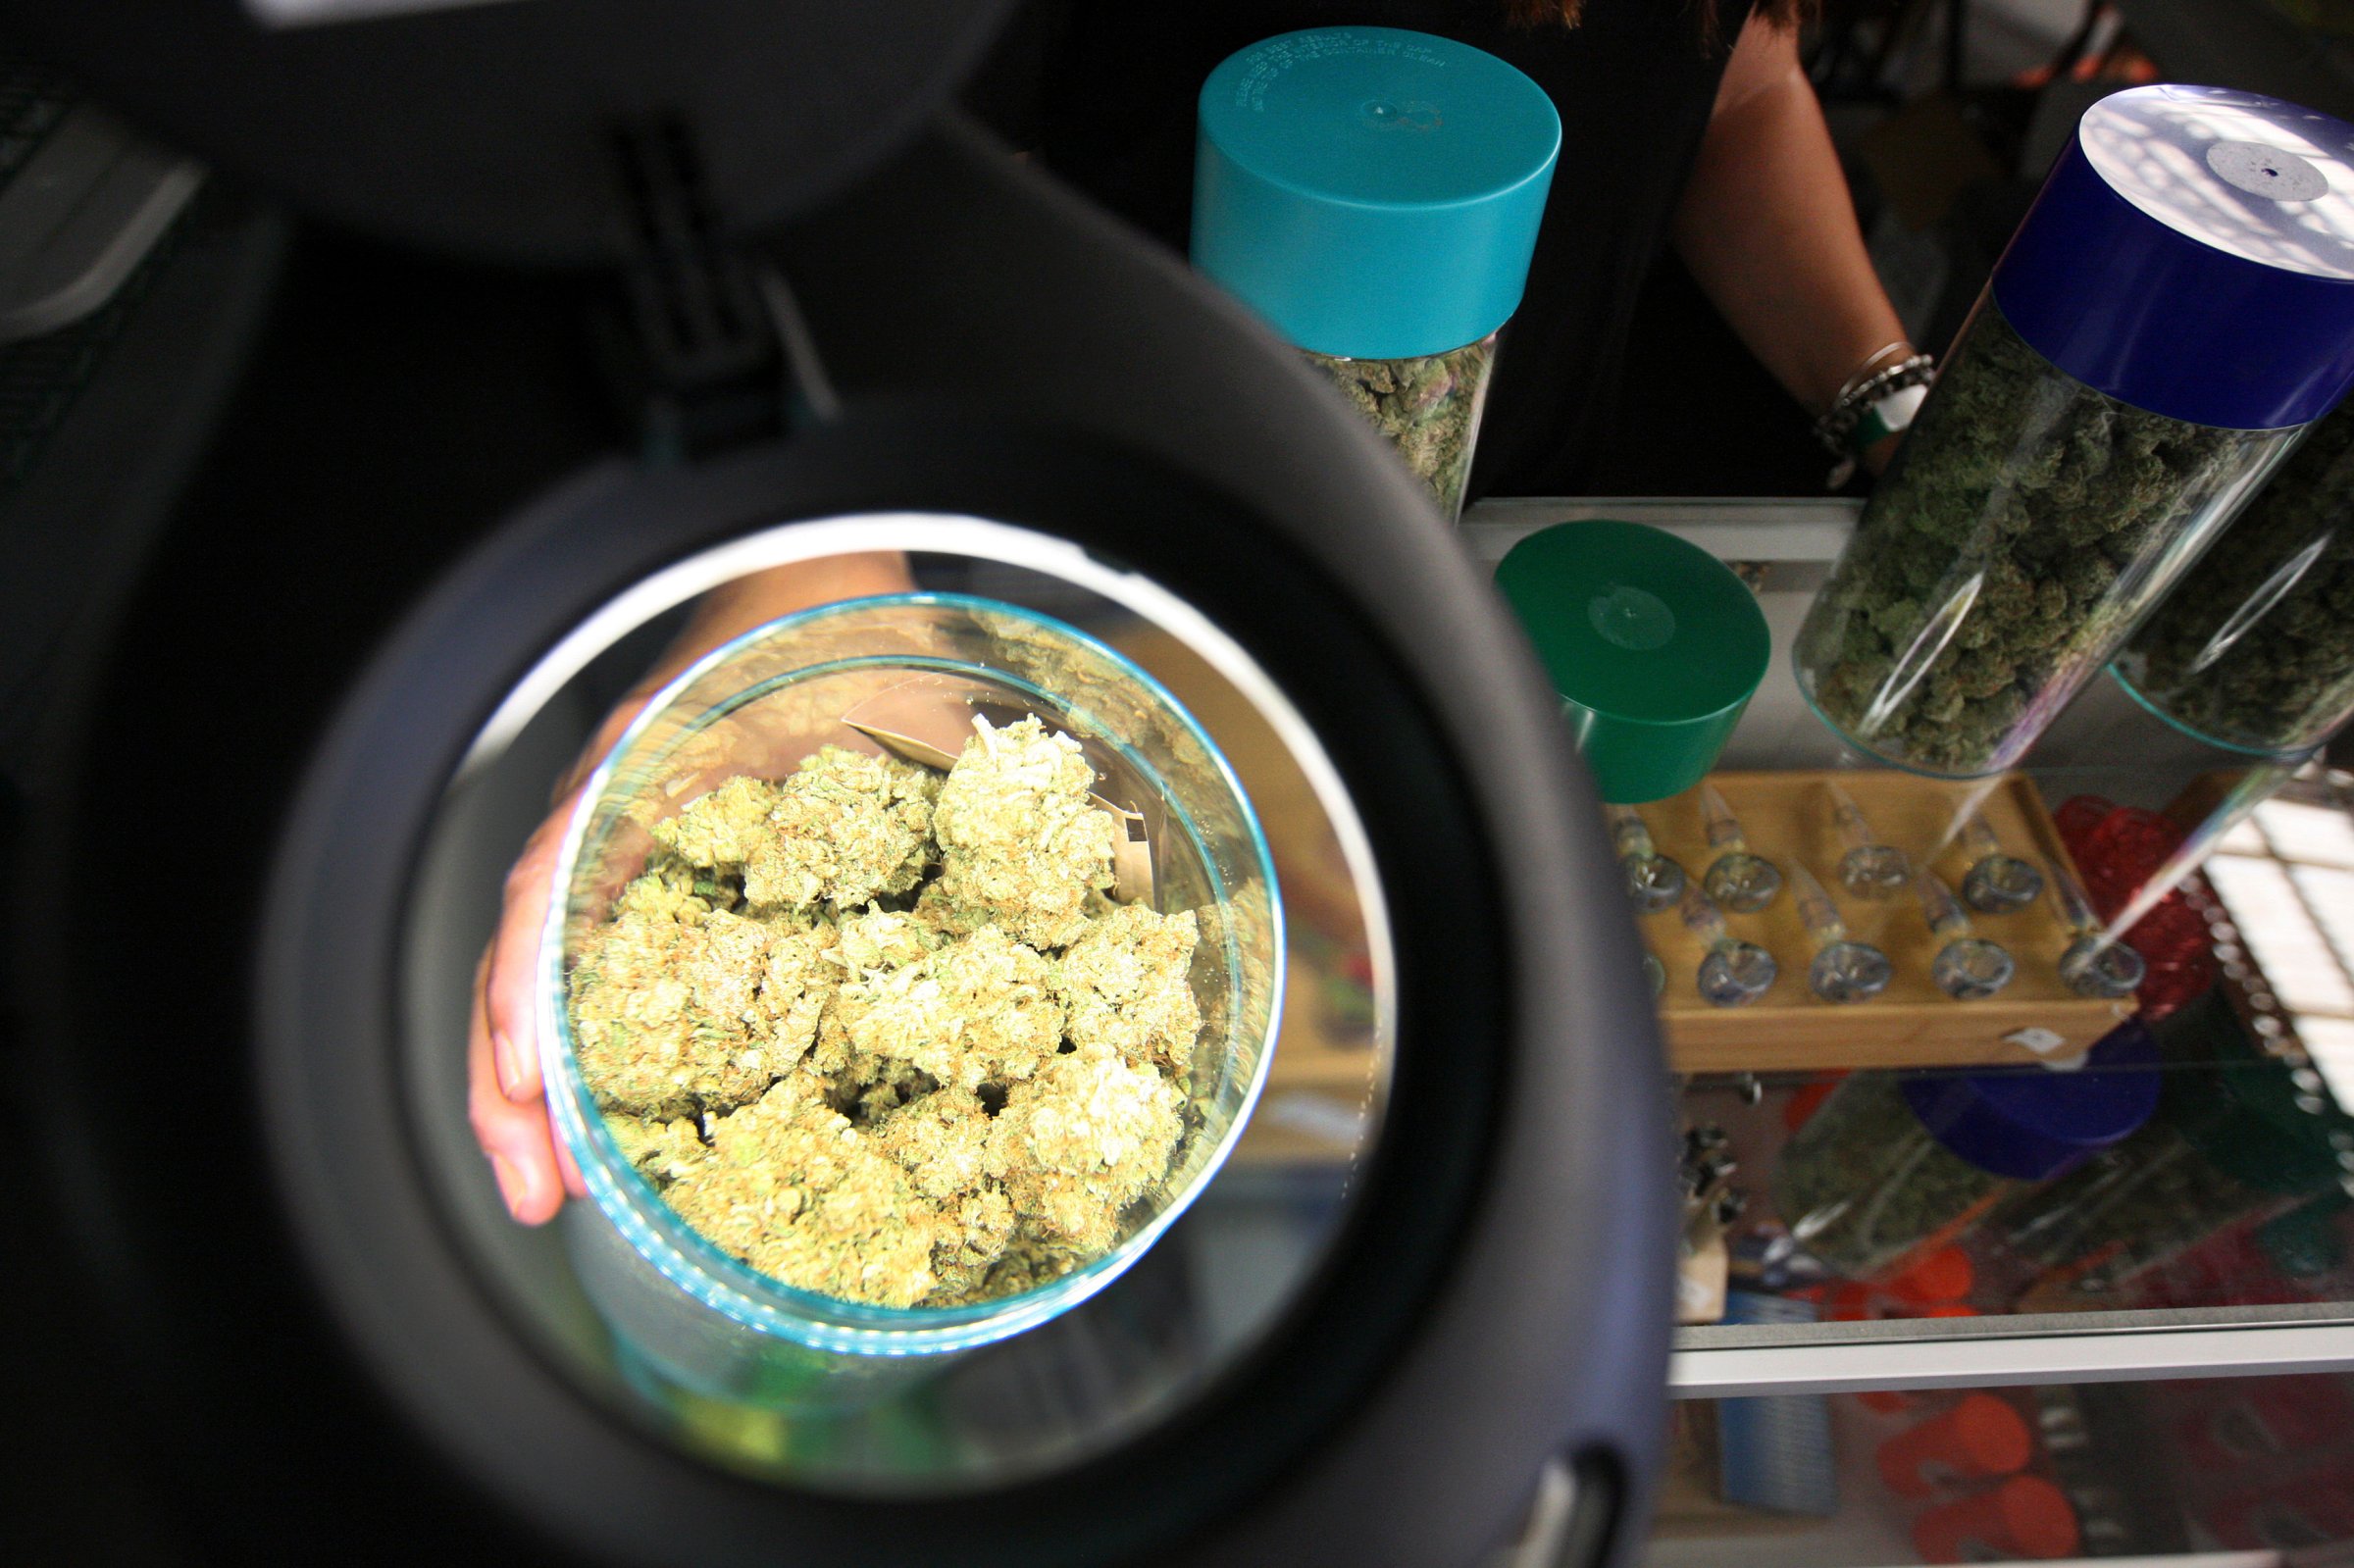 Marijuana is seen under a magnifier at the medical marijuana farmers market in Los Angeles